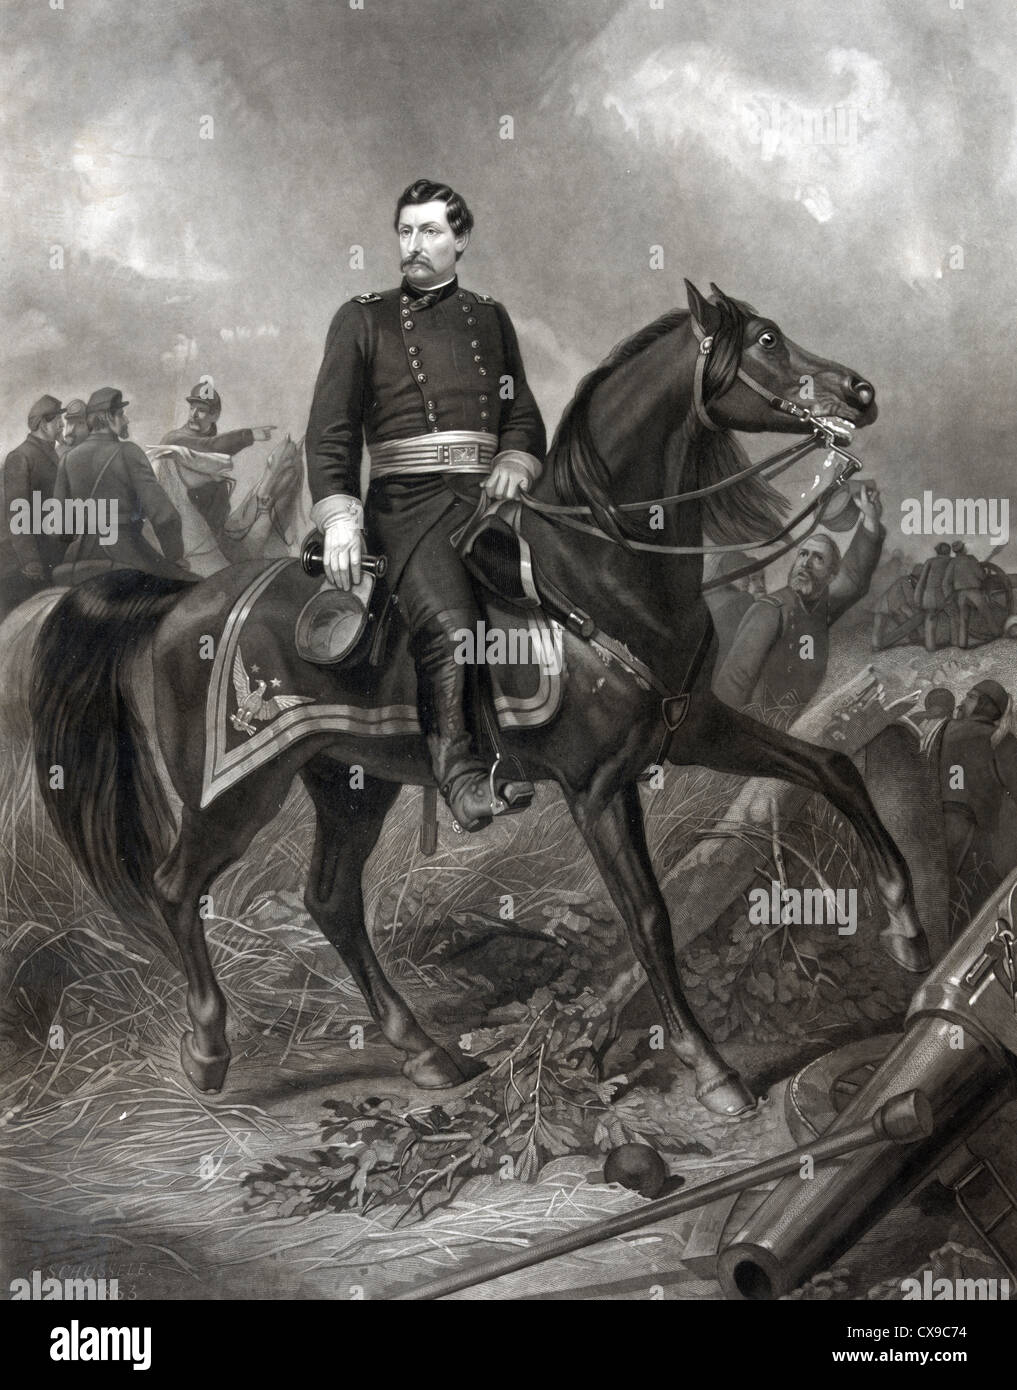 Major General George Brinton McClellan at the Battle of Antietam also known as the Battle of Sharpsburg, American Civil War Stock Photo